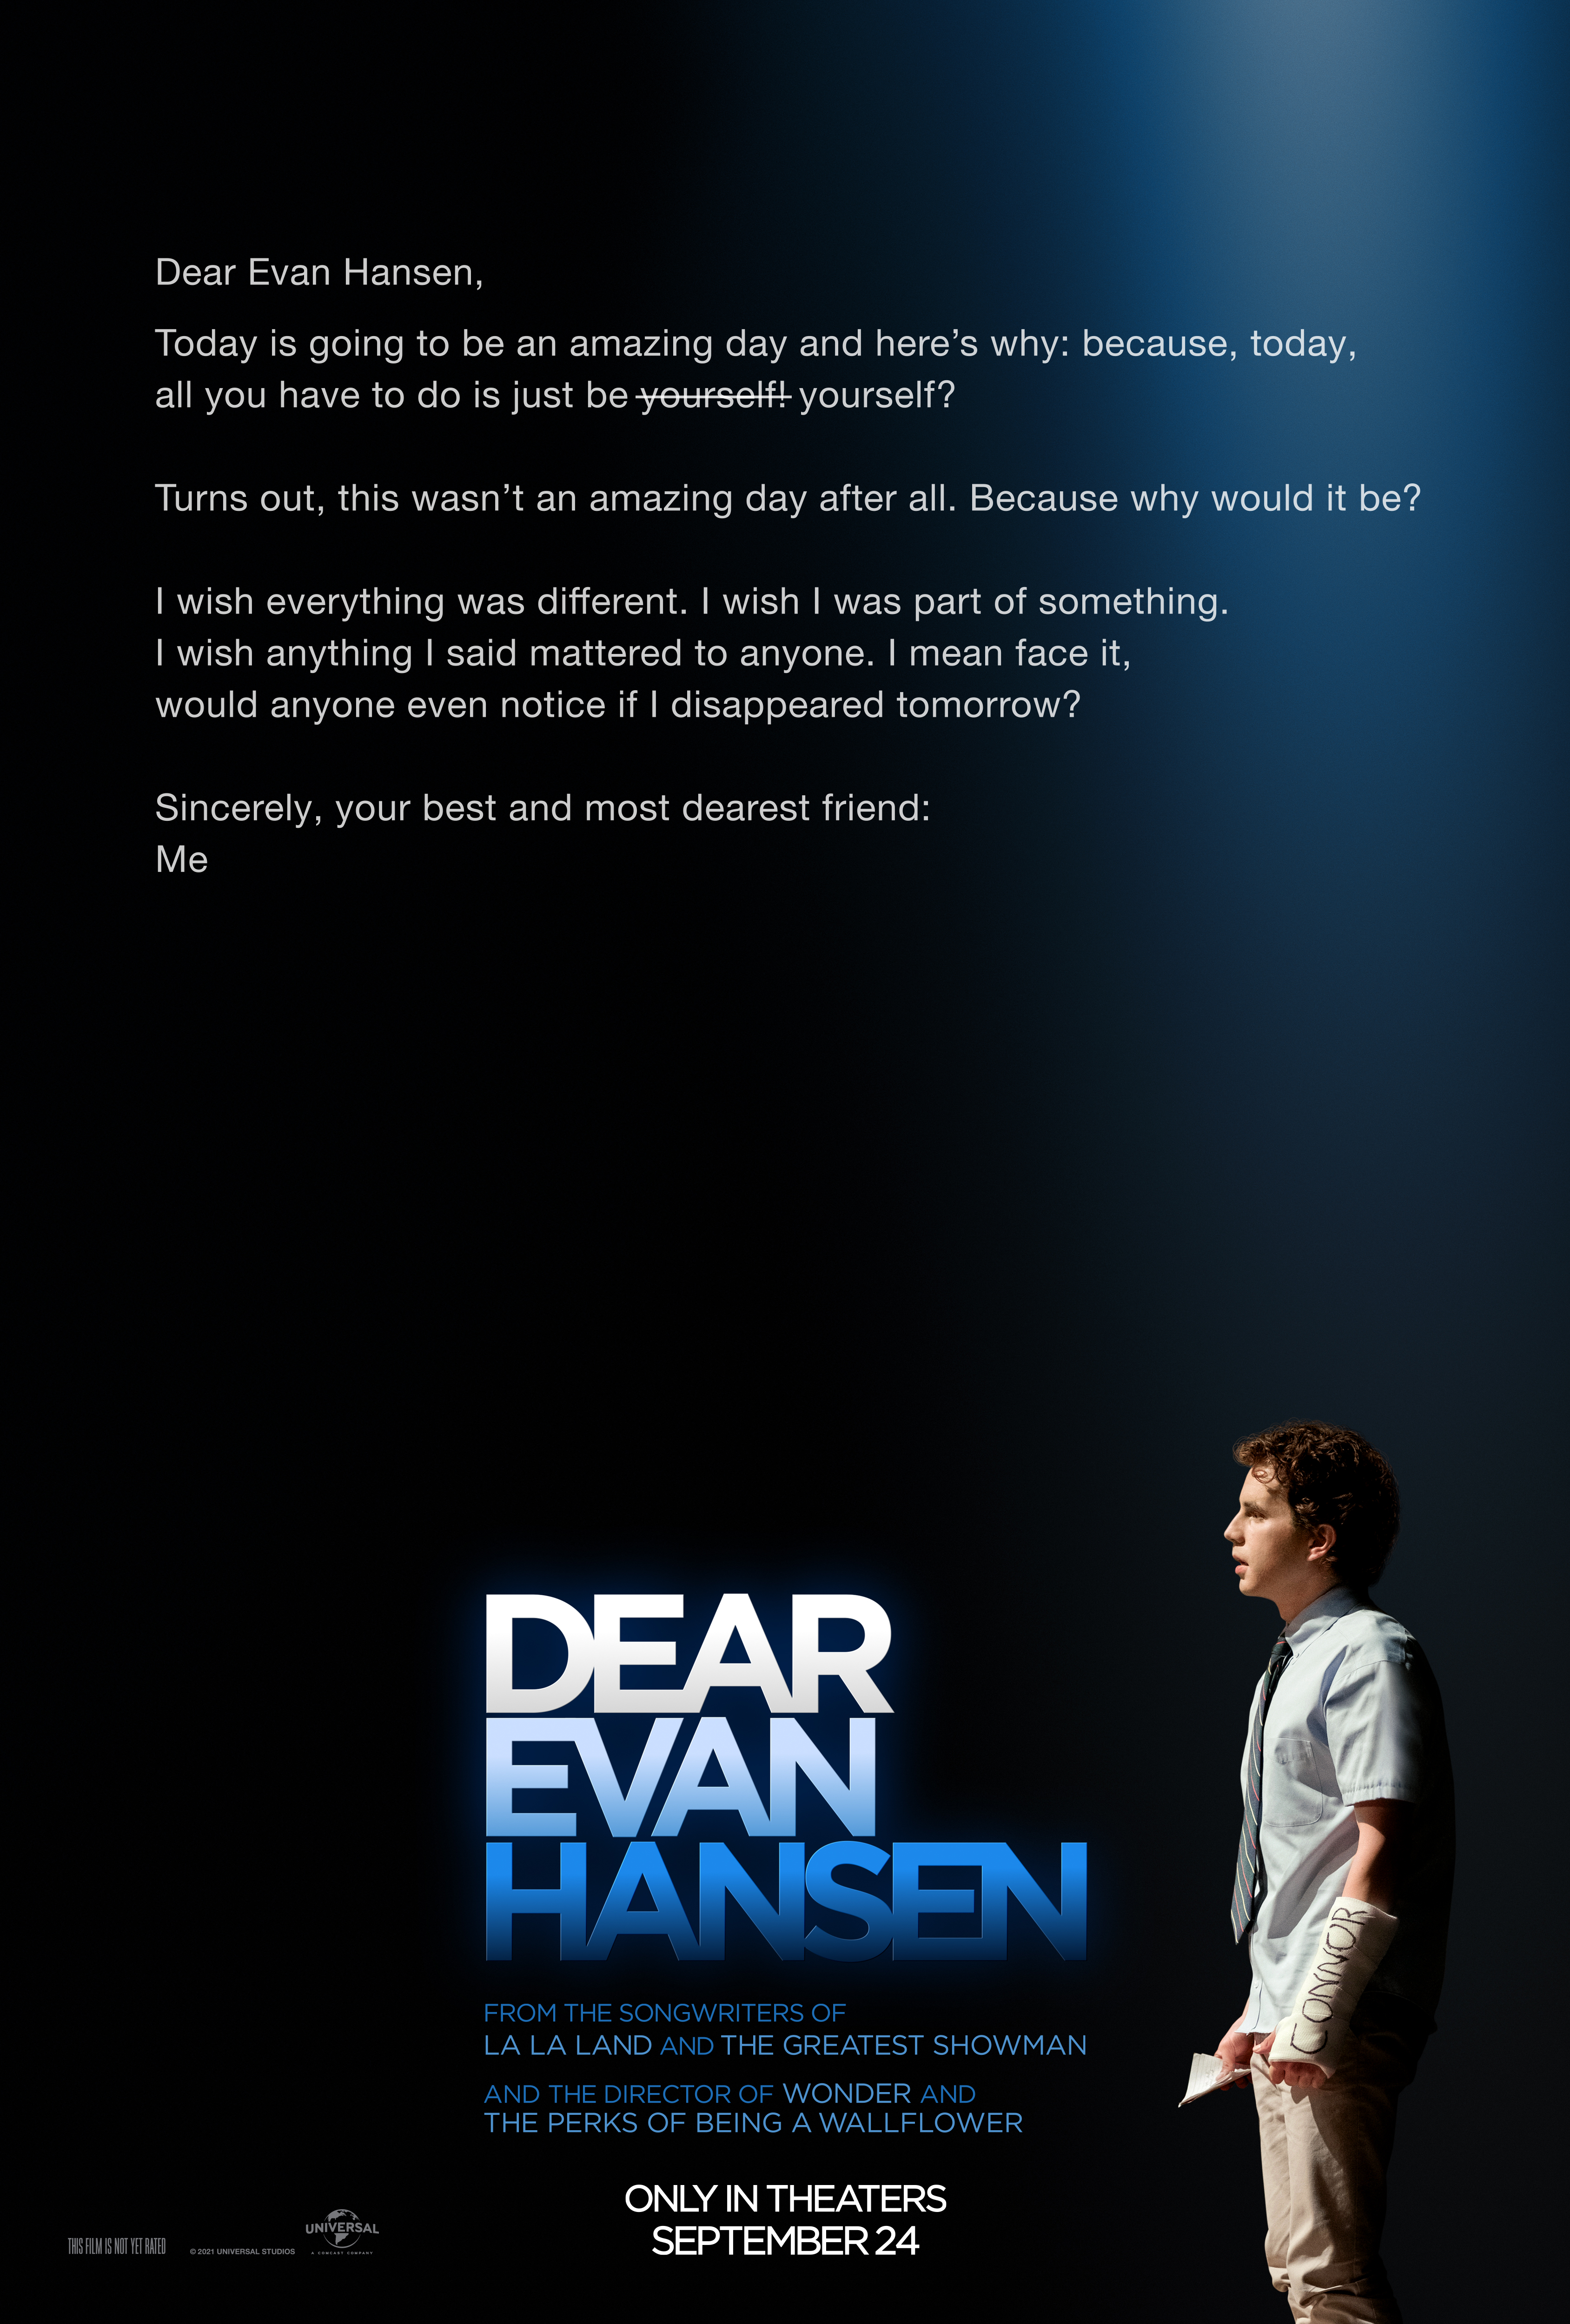 Nonton film Dear Evan Hansen layarkaca21 indoxx1 ganool online streaming terbaru